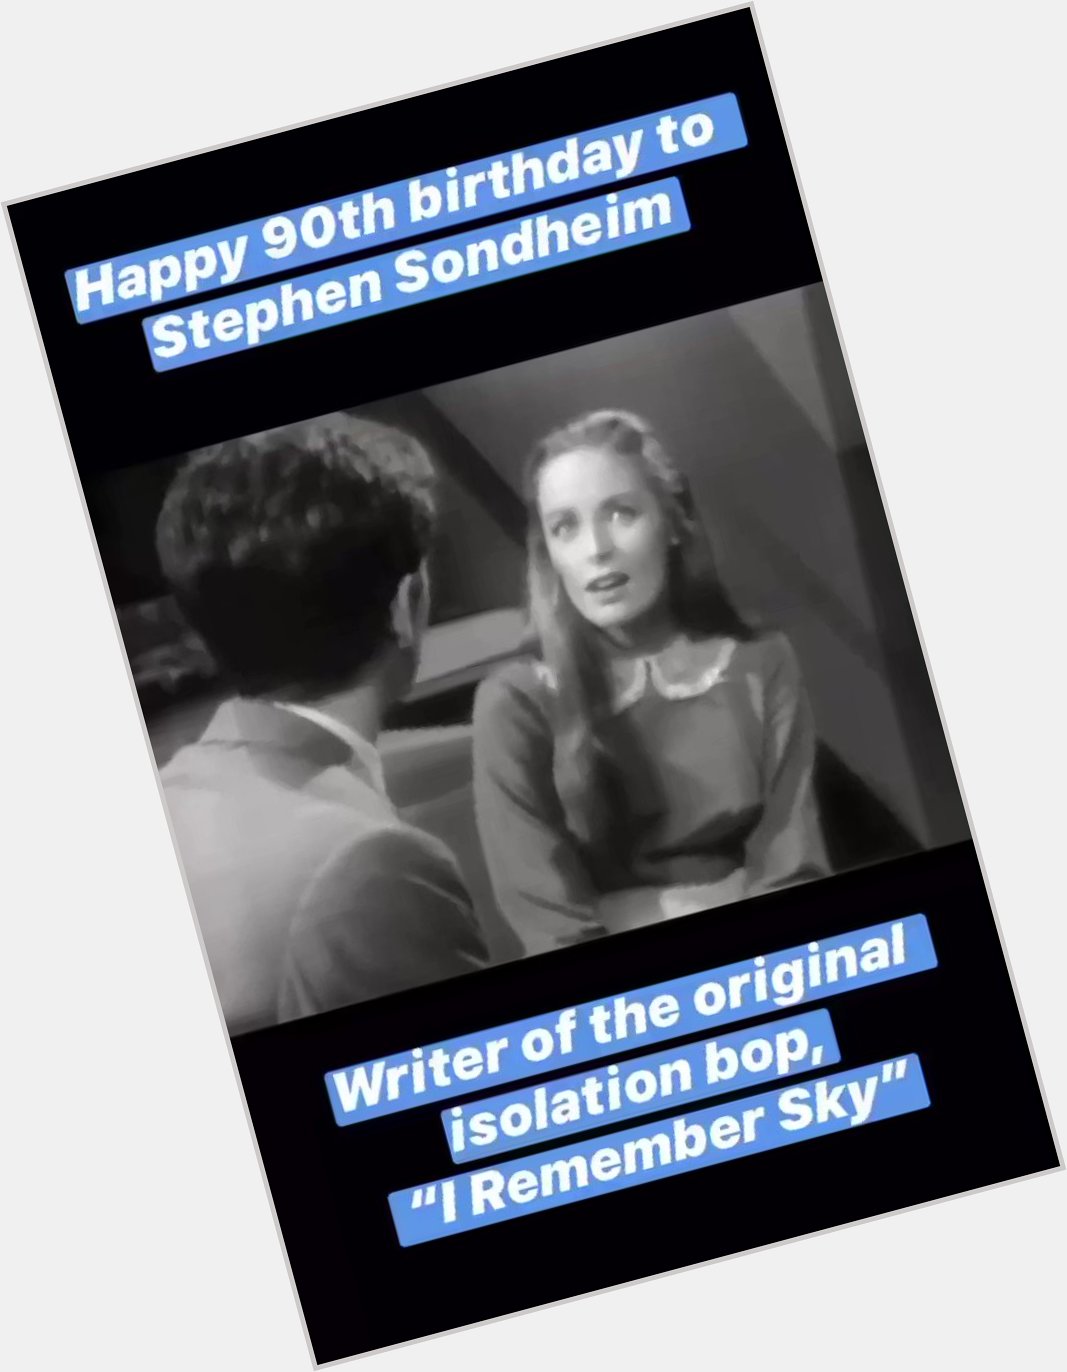 Happy 90th birthday to Stephen Sondheim, writer of the original isolation bop, I Remember Sky 